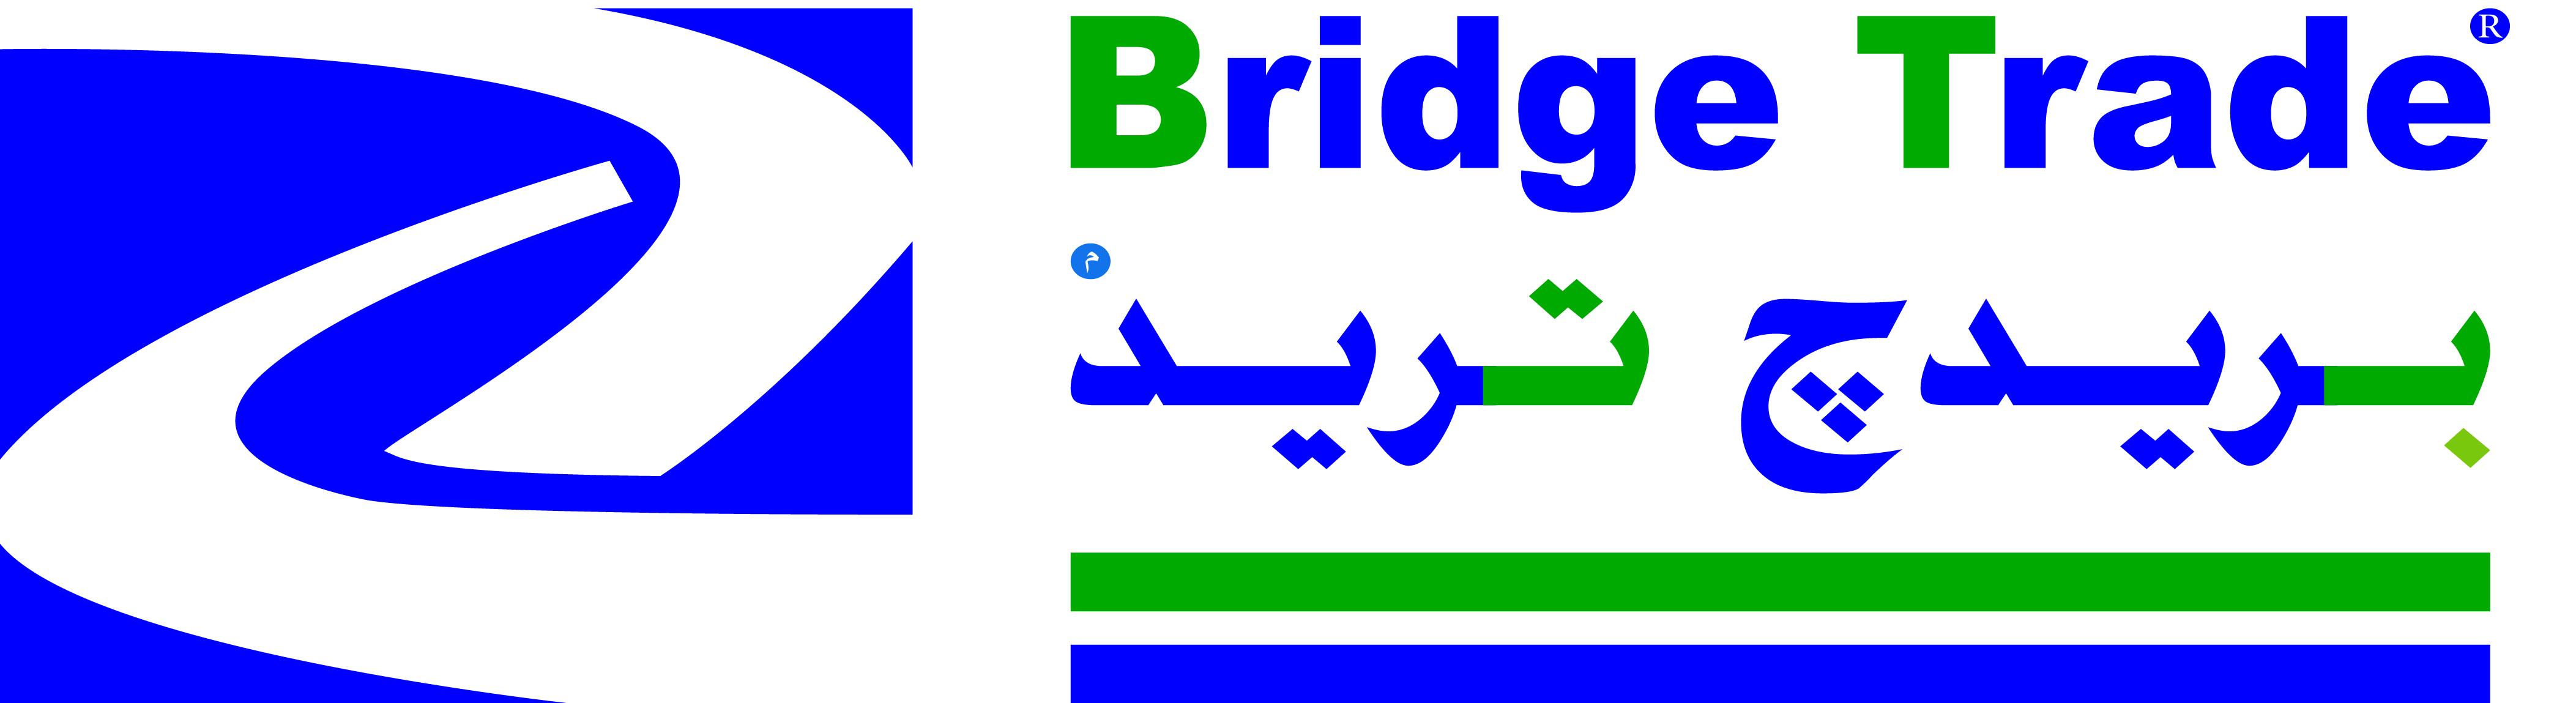 Bridge Trade